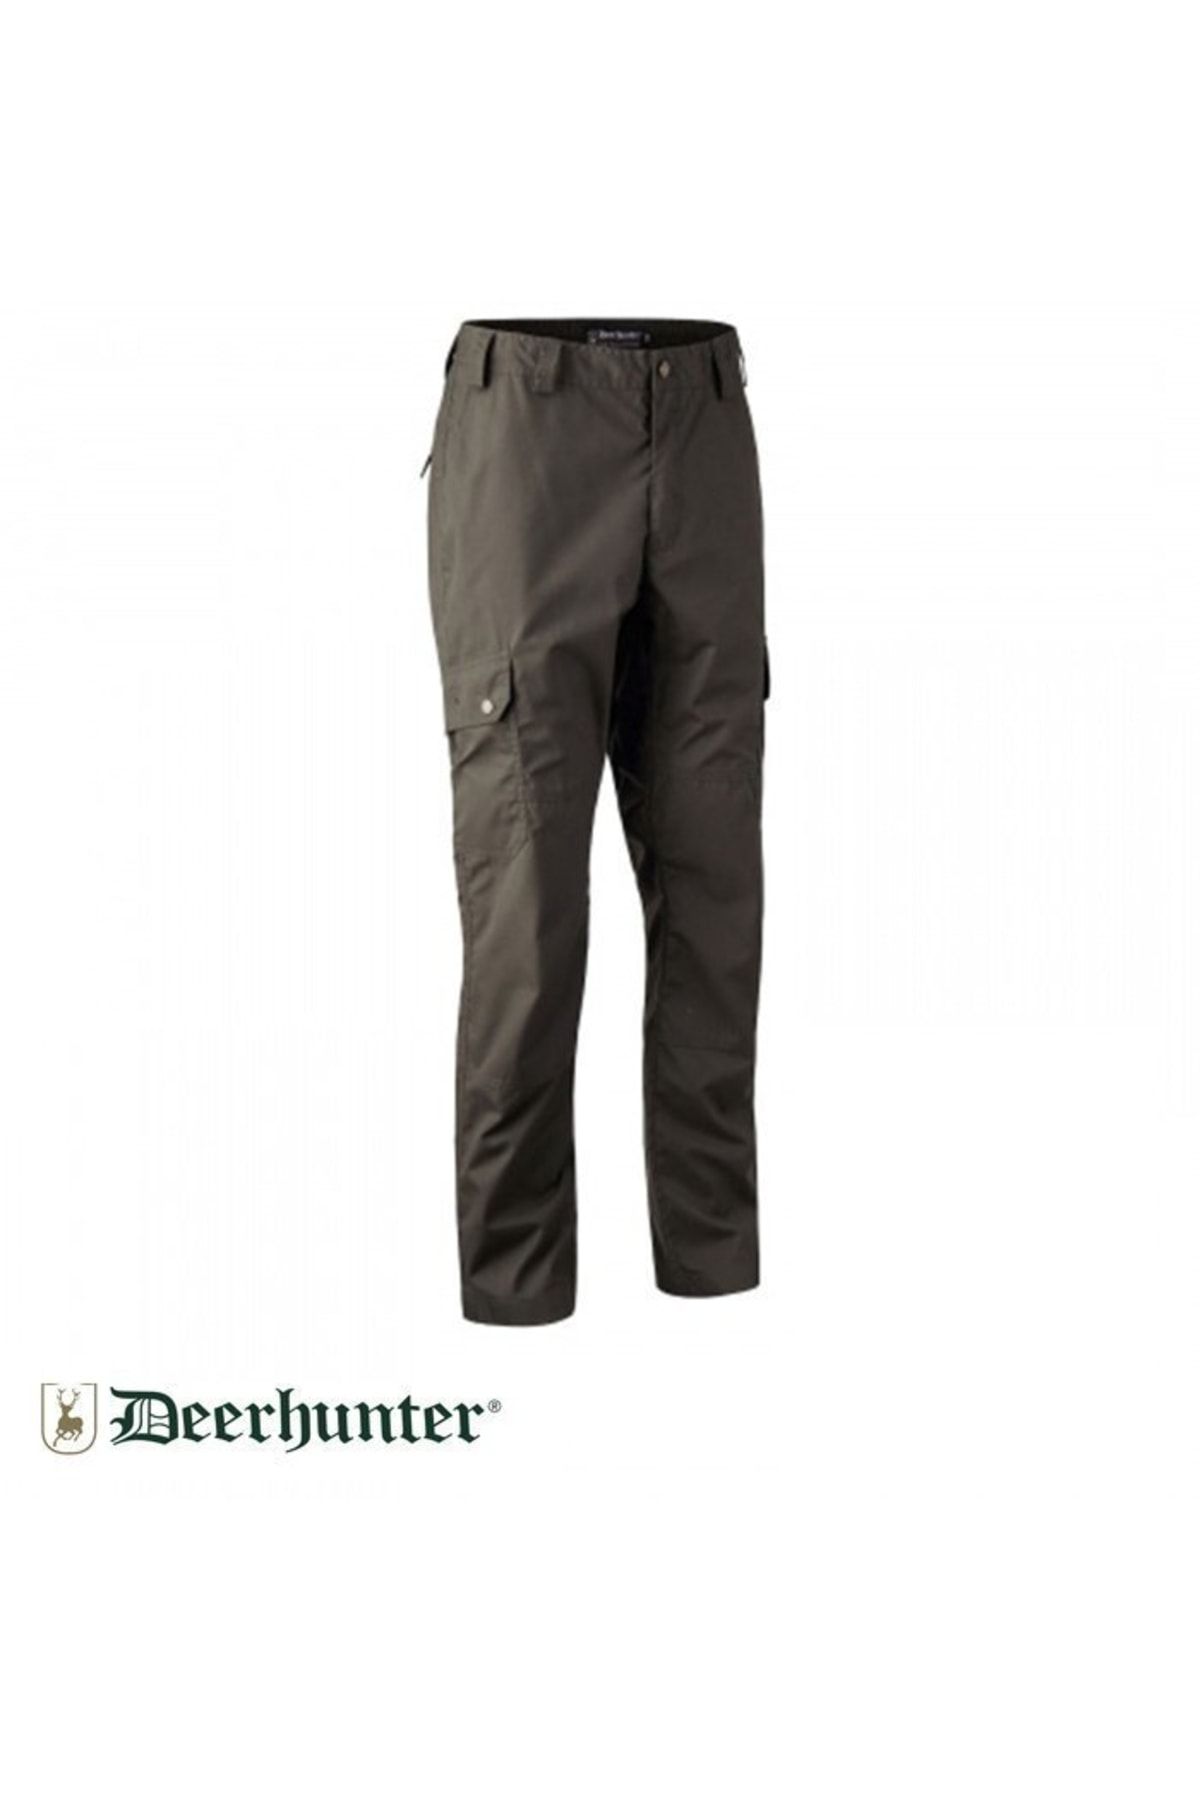 Deerhunter Lofoten Deepgreen Trekking Pantolonu 52